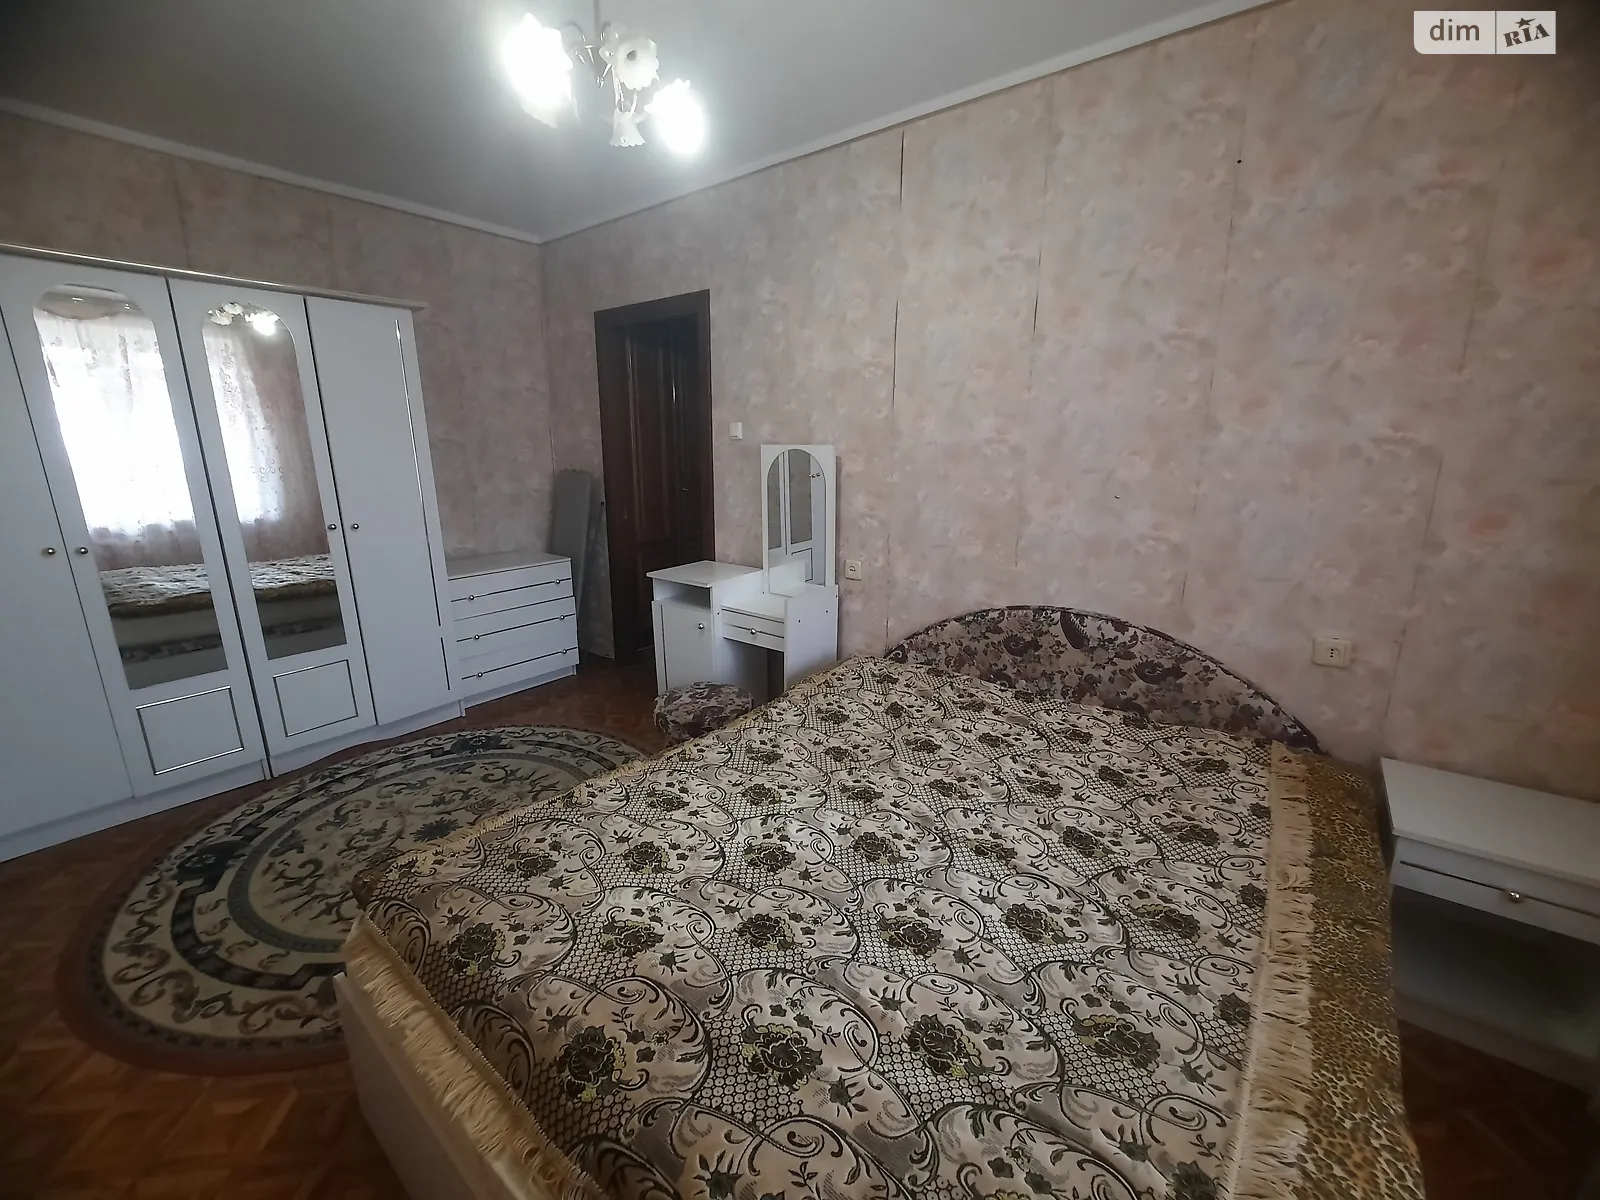 Сдается в аренду 2-комнатная квартира 50 кв. м в Одессе, ул. Академика Королева, 118 - фото 1